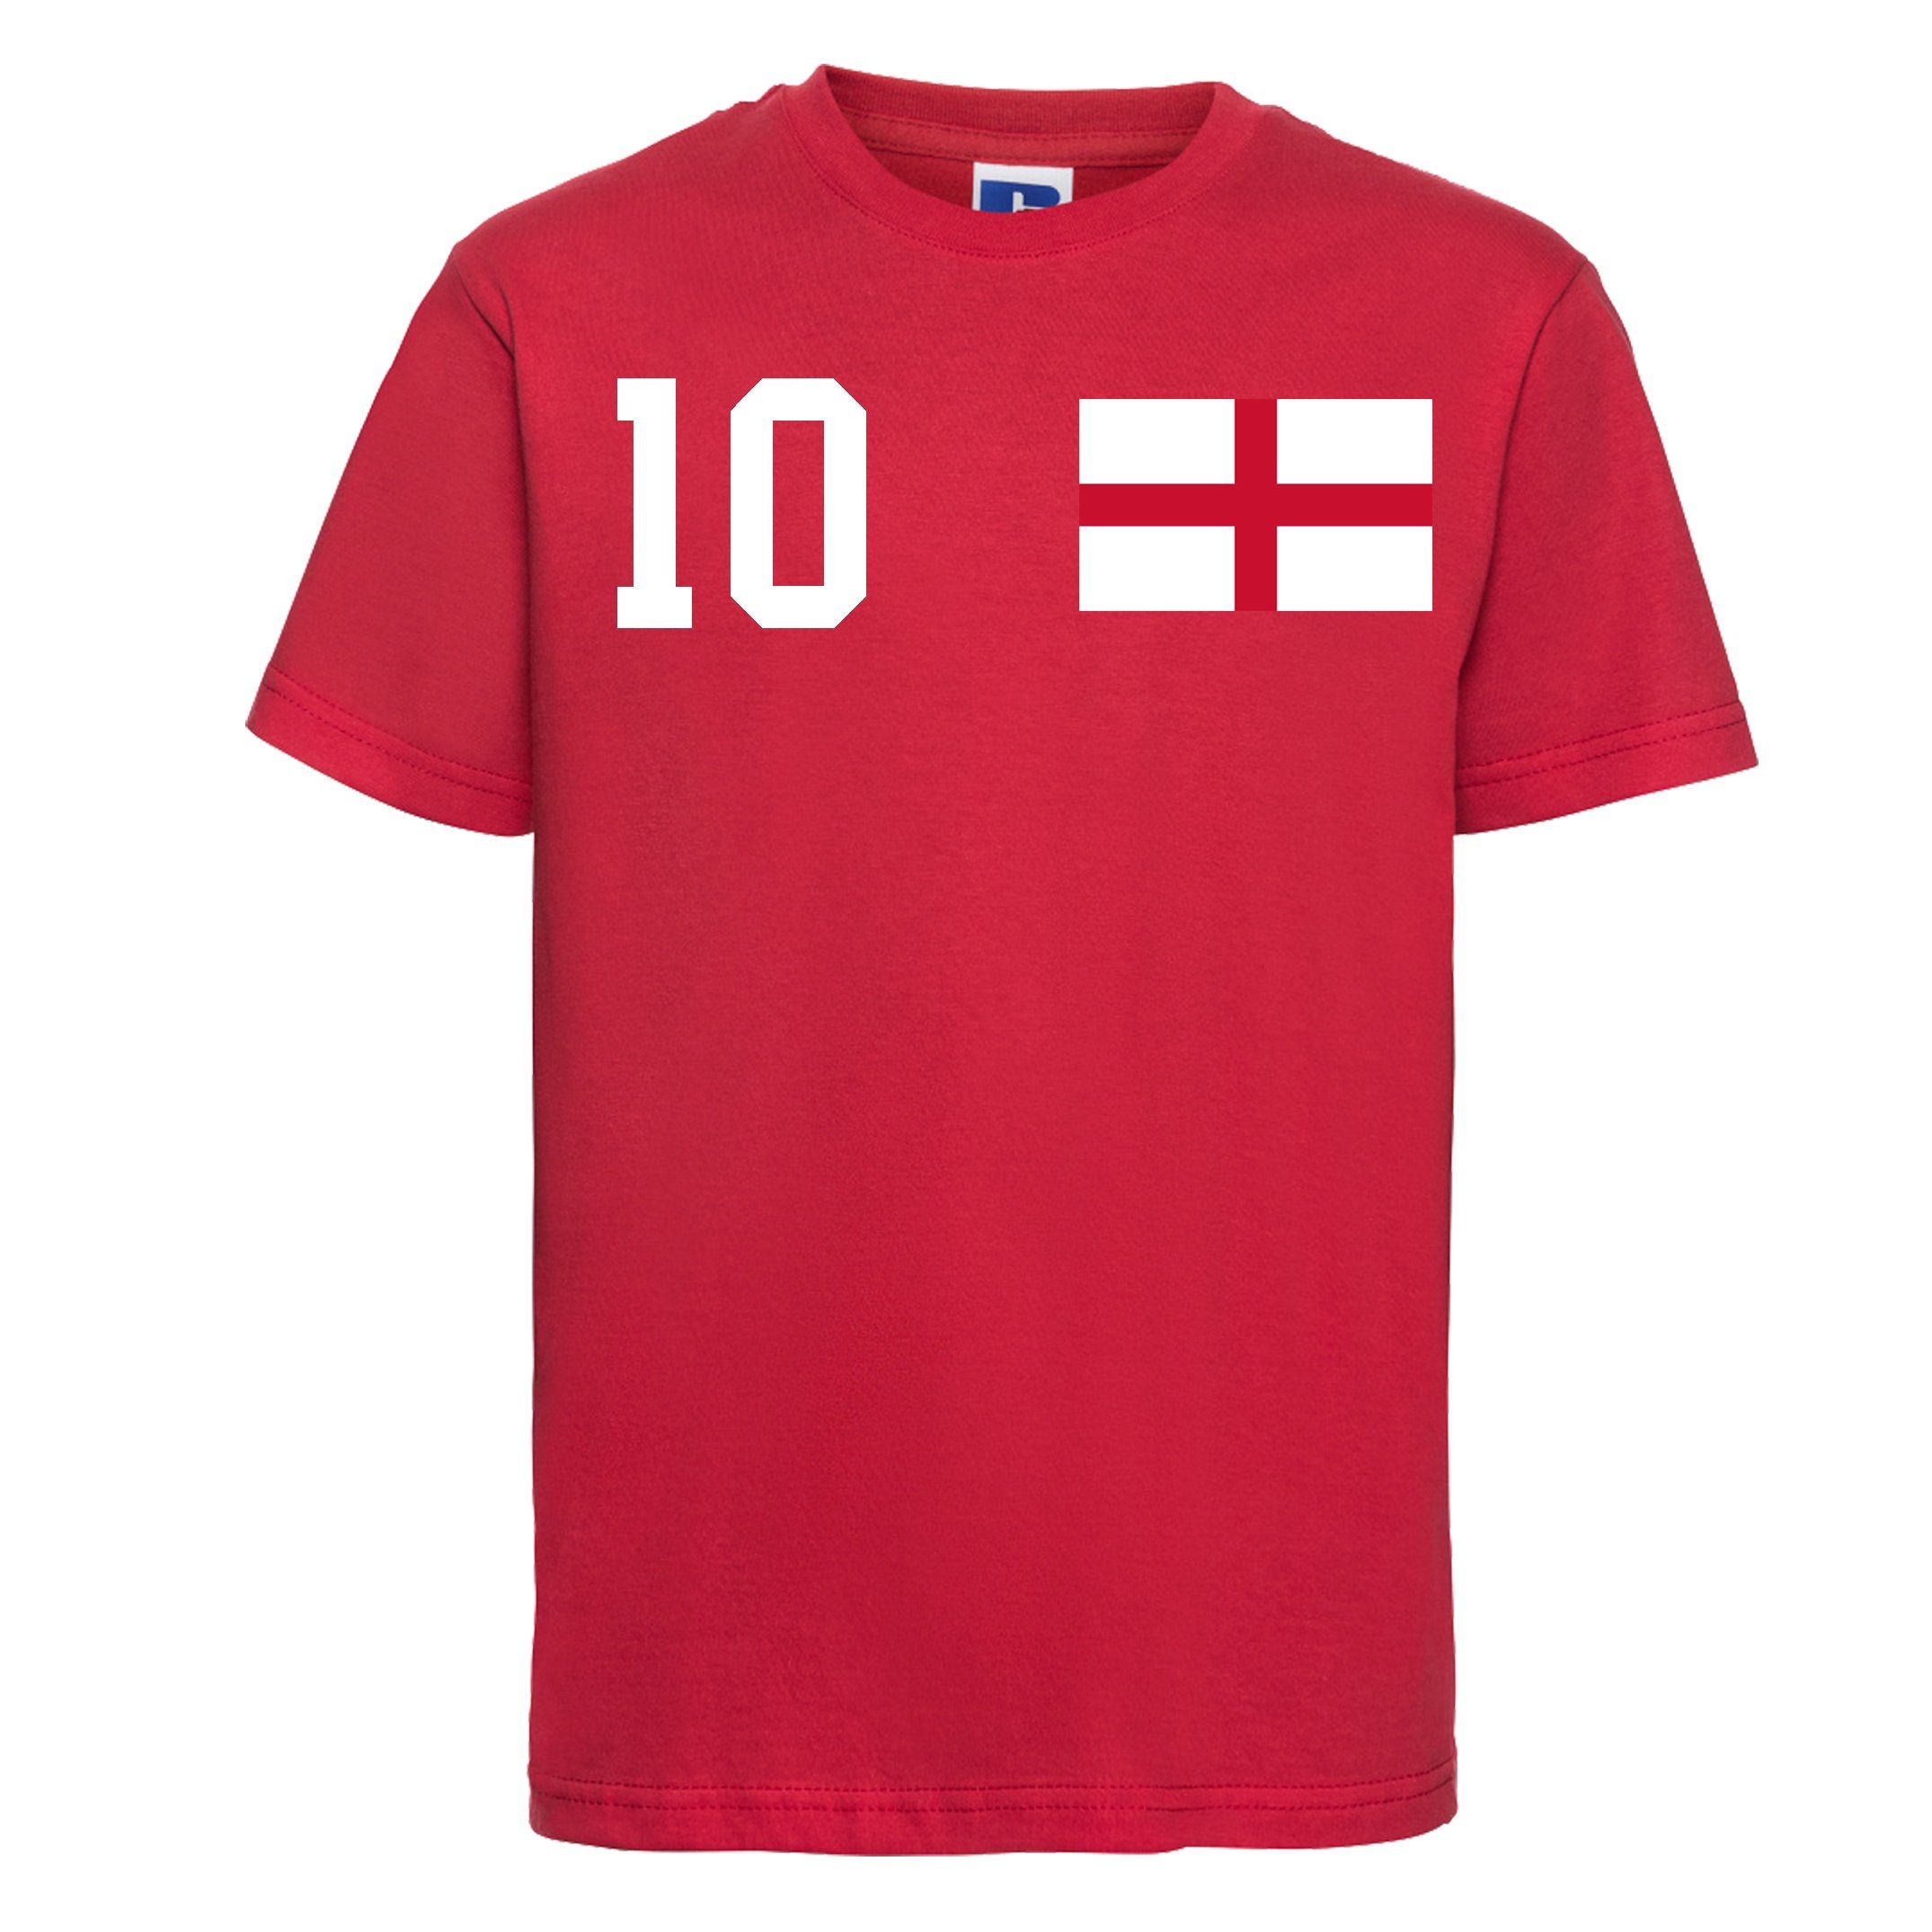 Youth Designz T-Shirt England Kinder T-Shirt im Fußball Trikot Look mit trendigem Motiv